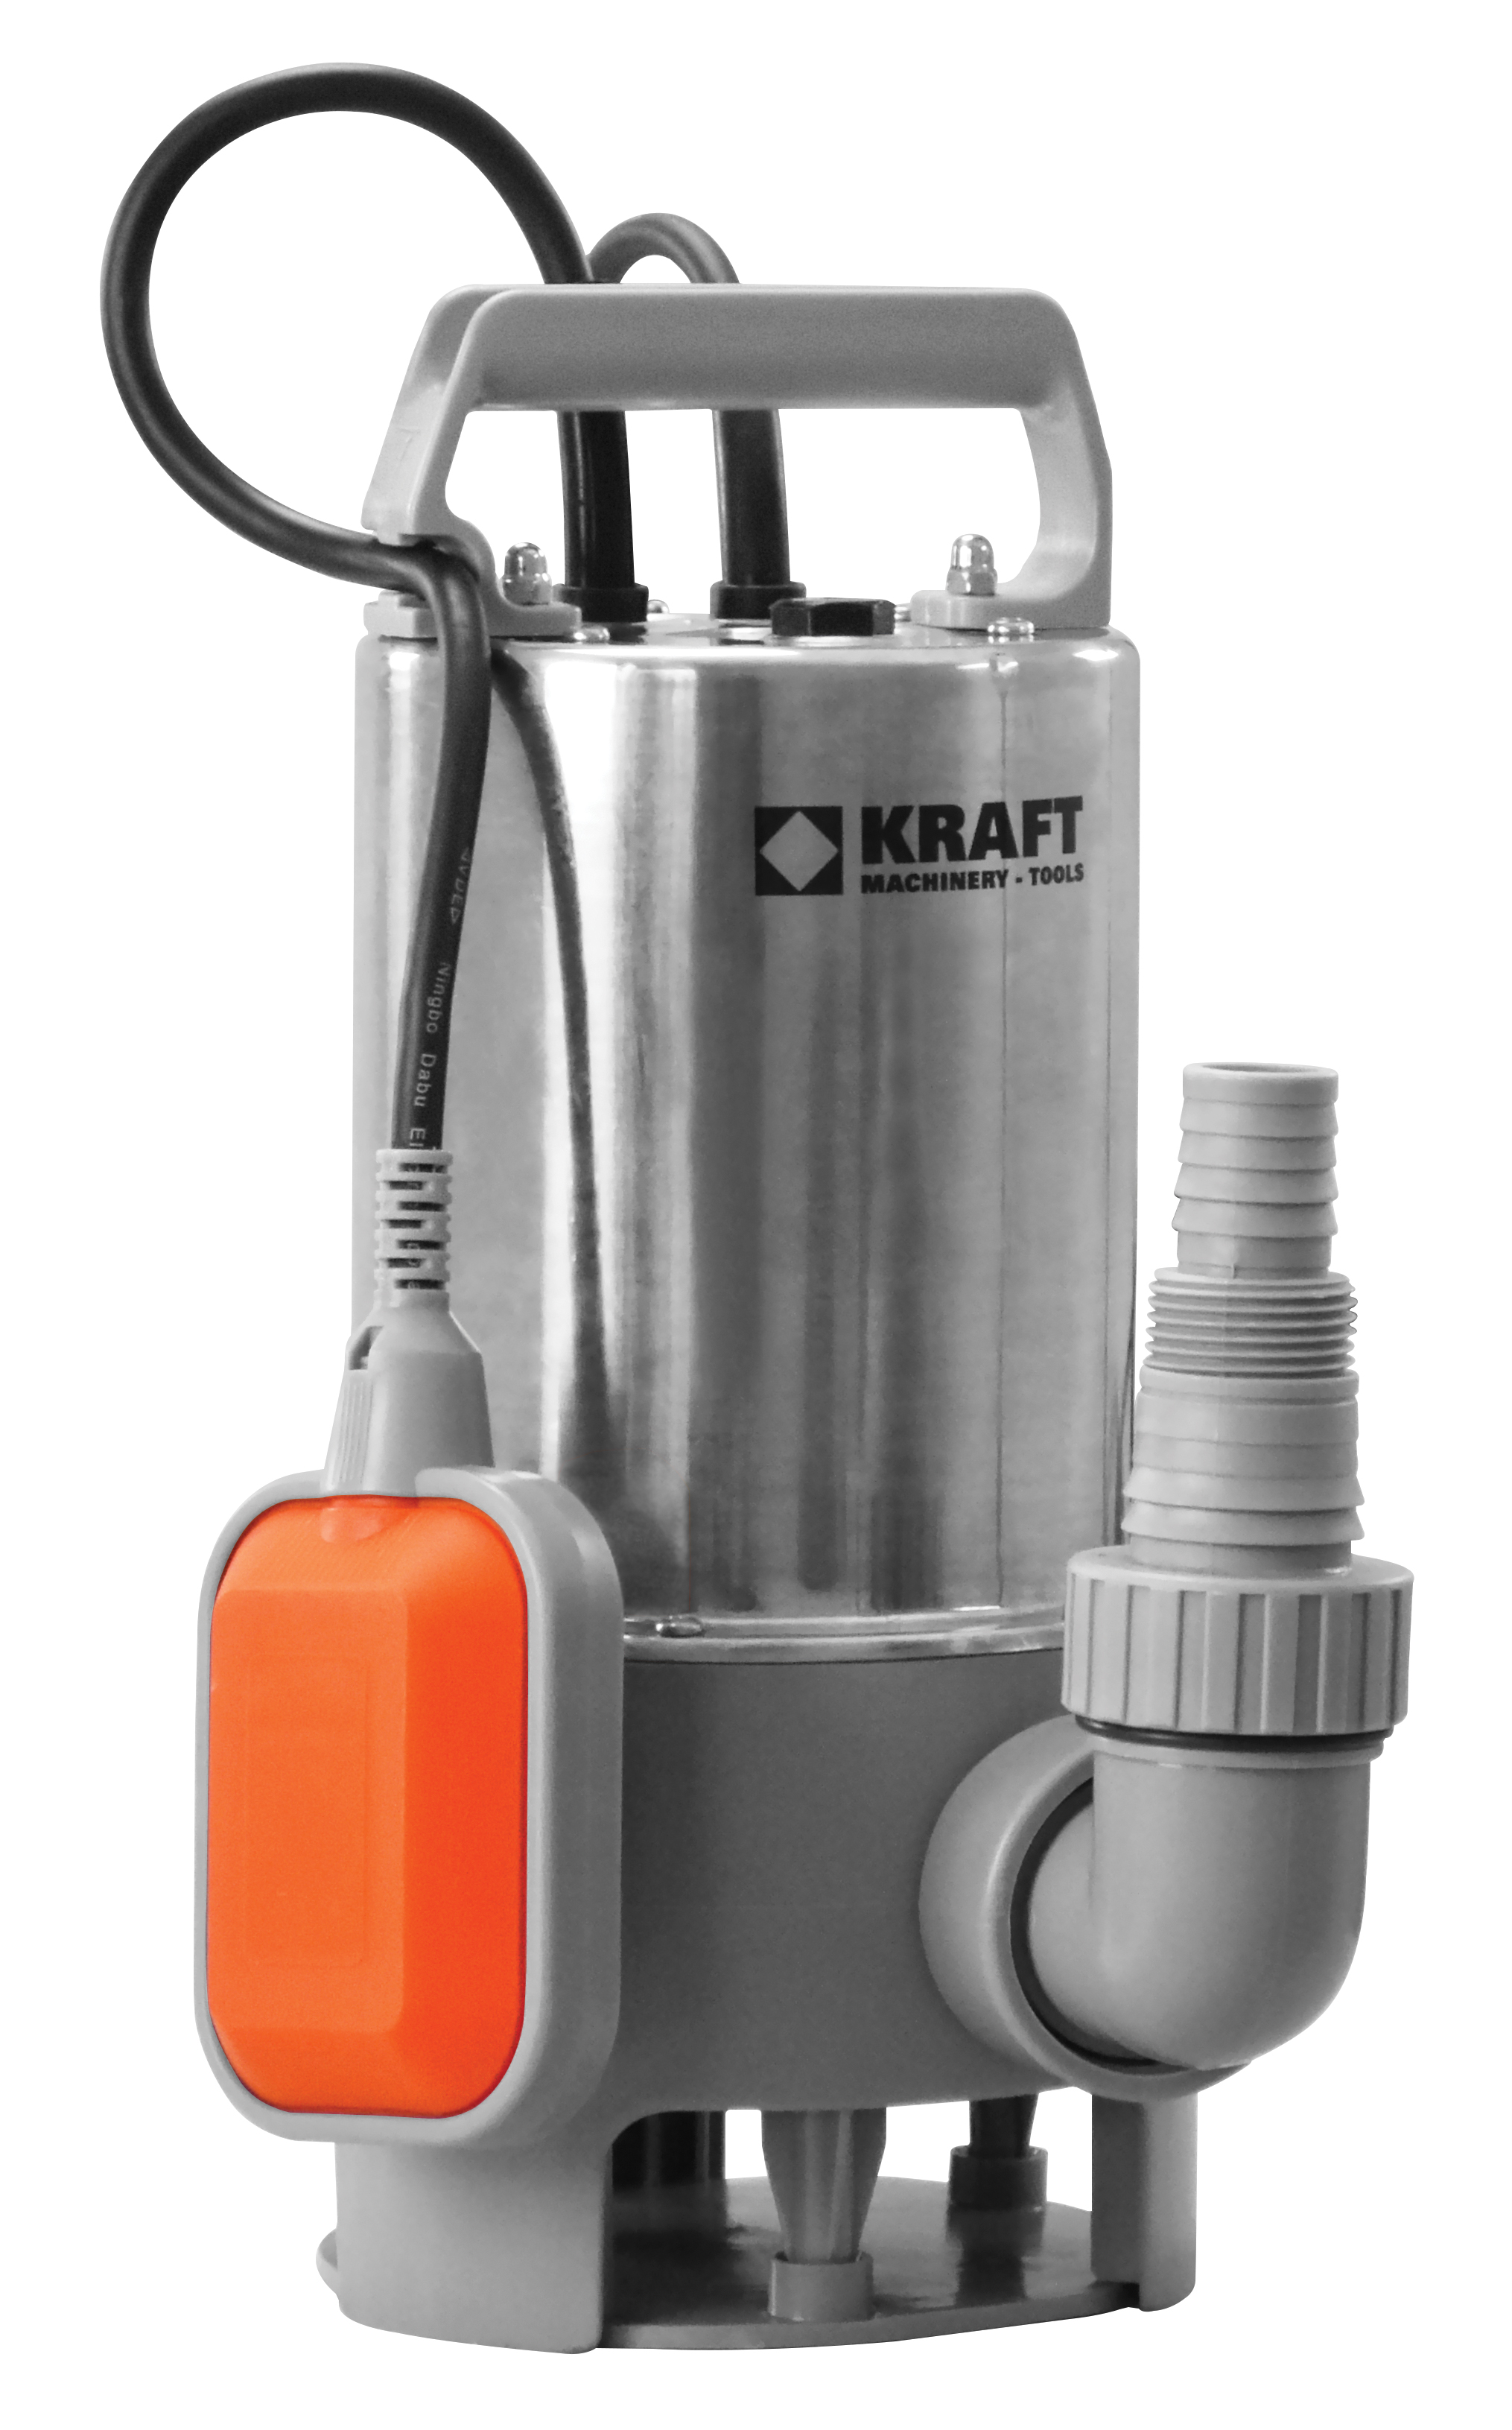 Stainless Sumberssible Sewage Pump 750W Kraft